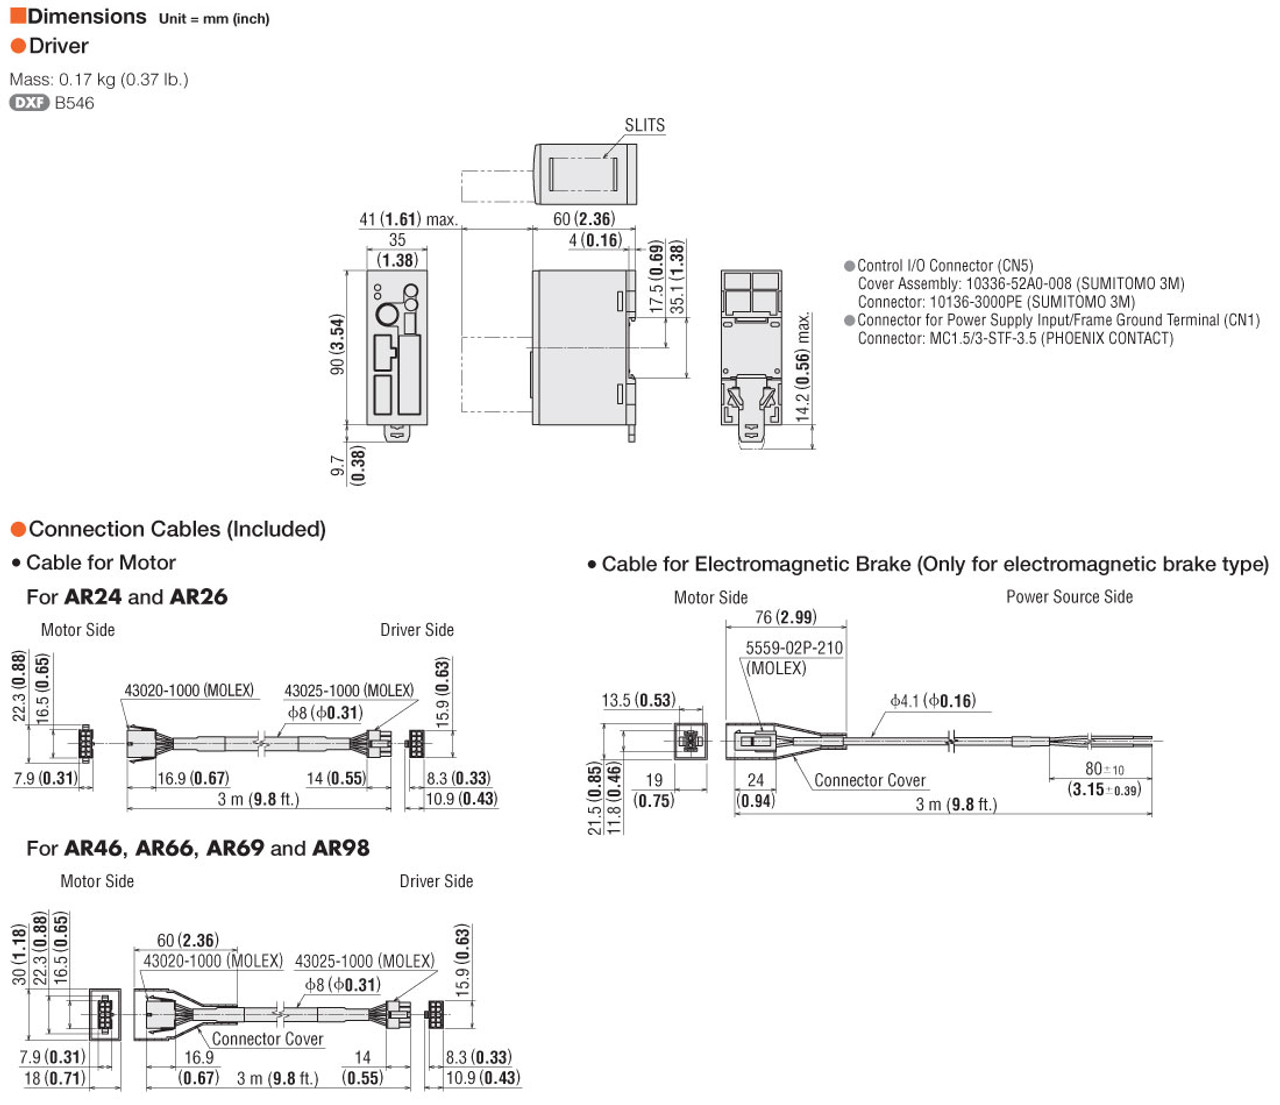 AR46AK-PS10-3 - Dimensions